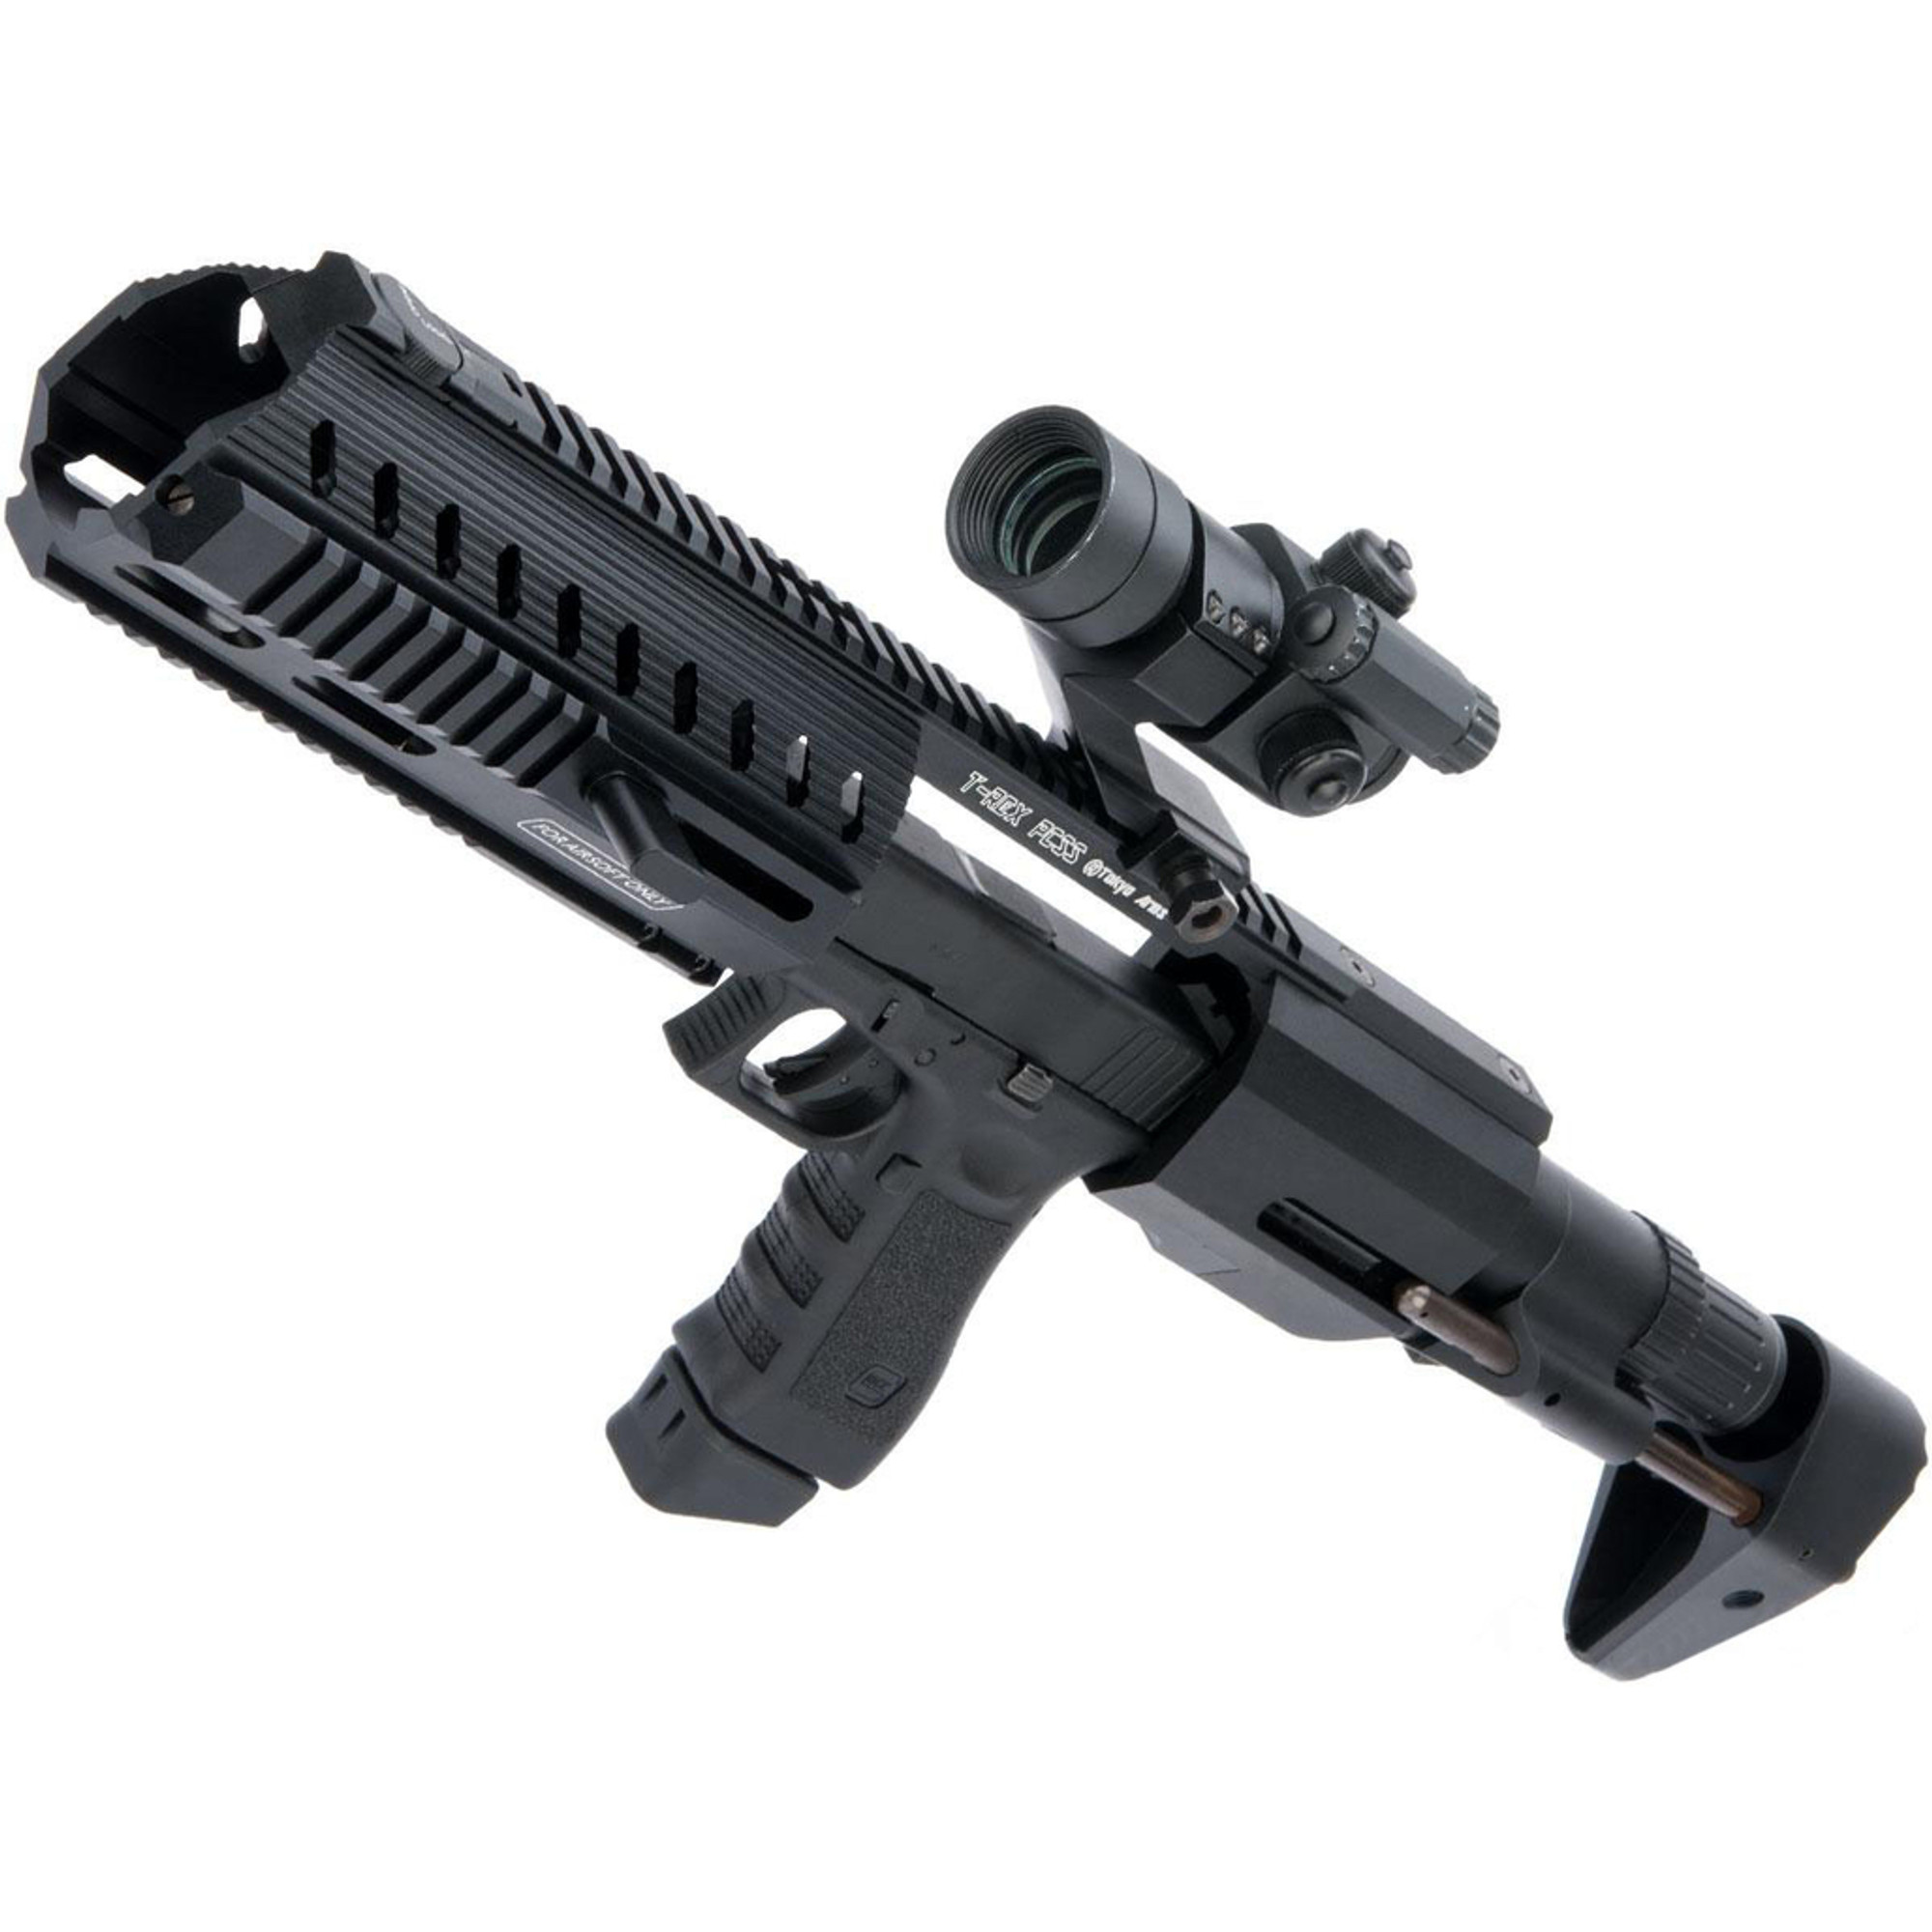 Tokyo Arms T-REX PCSS Conversion Kit for Elite Force GLOCK Series GBB Pistols